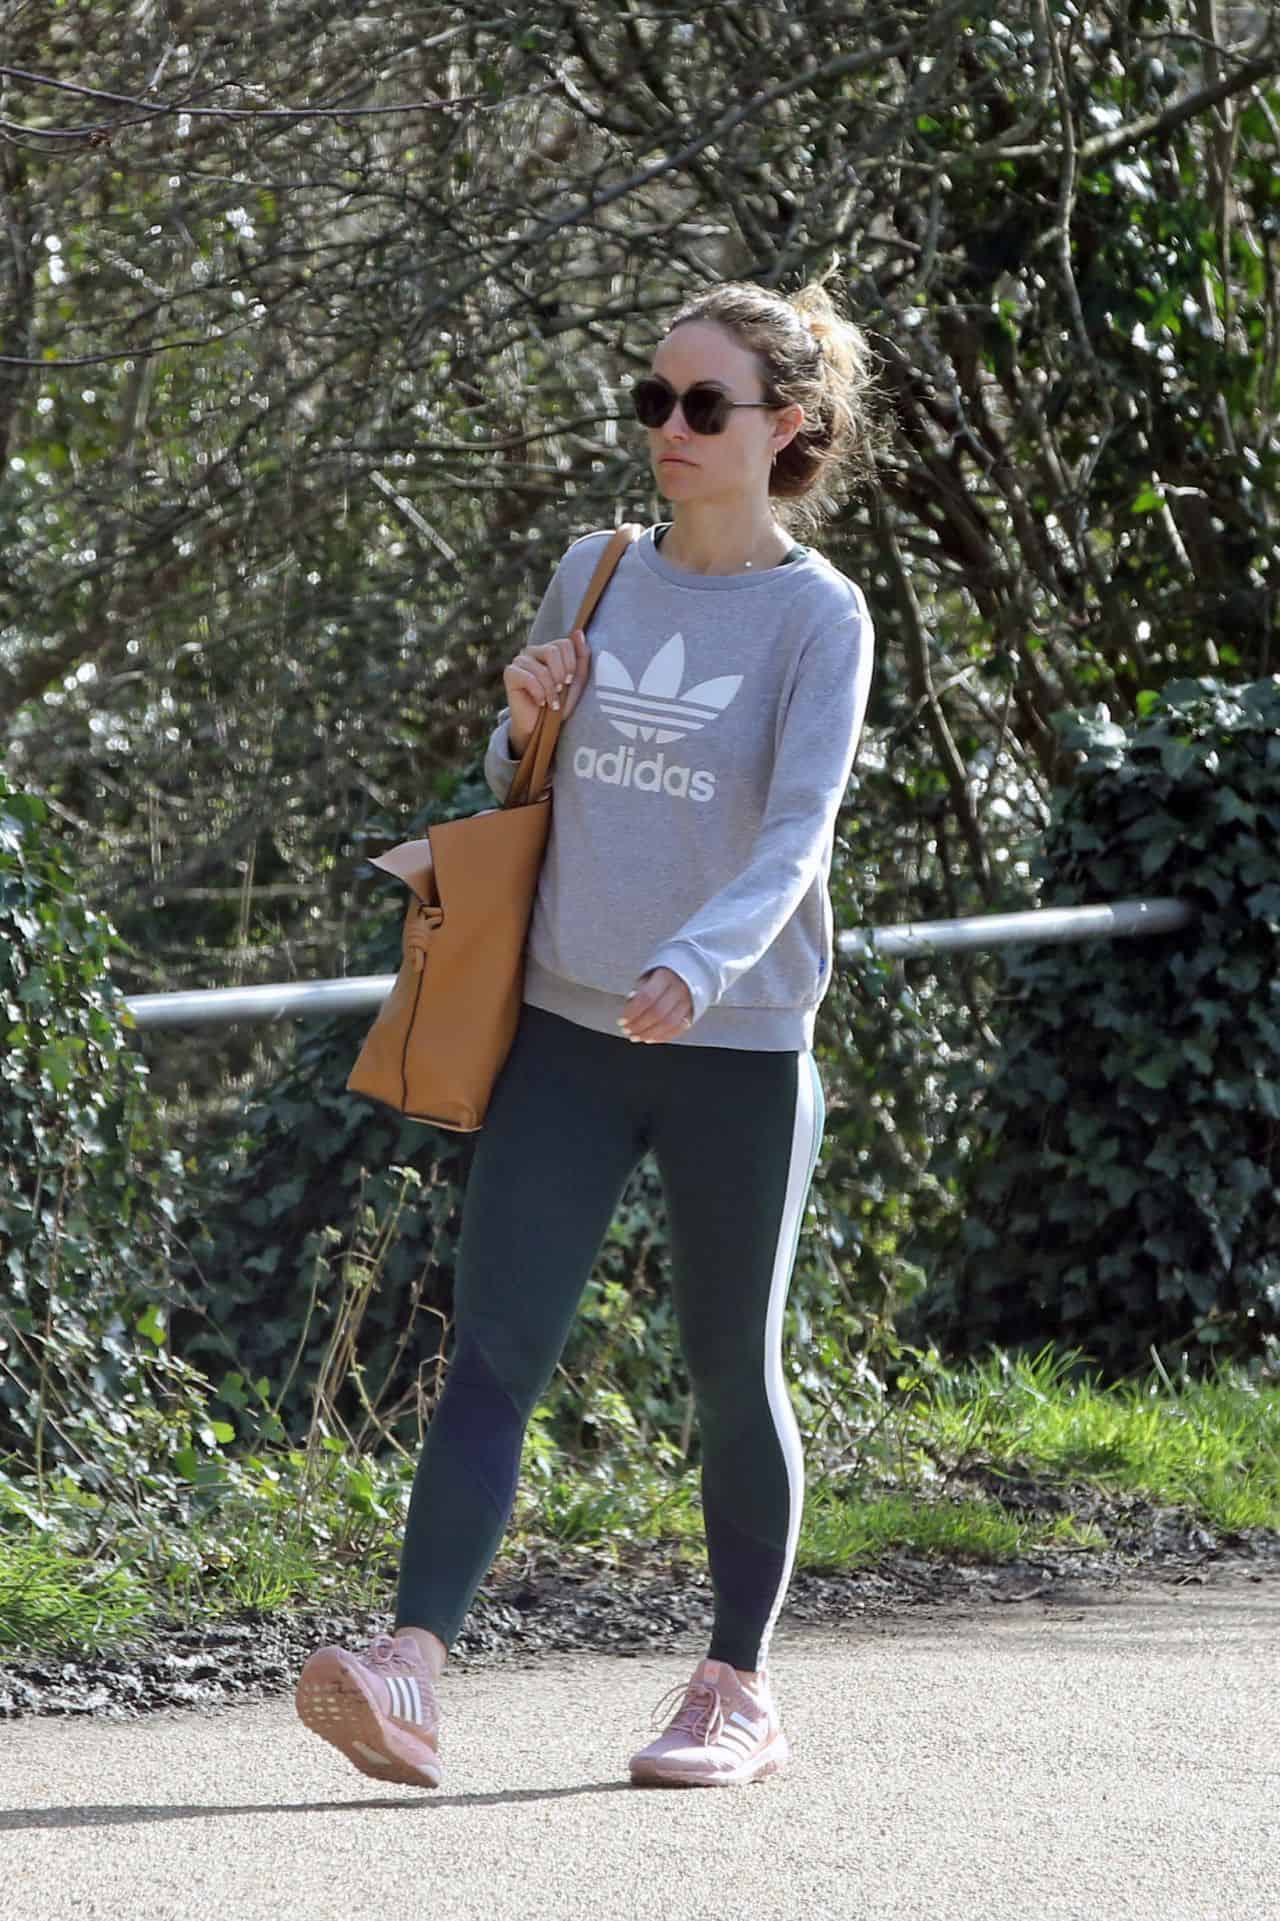 Olivia Wilde Looking Casual as She Enjoys a Solo Walk in Hampstead, UK